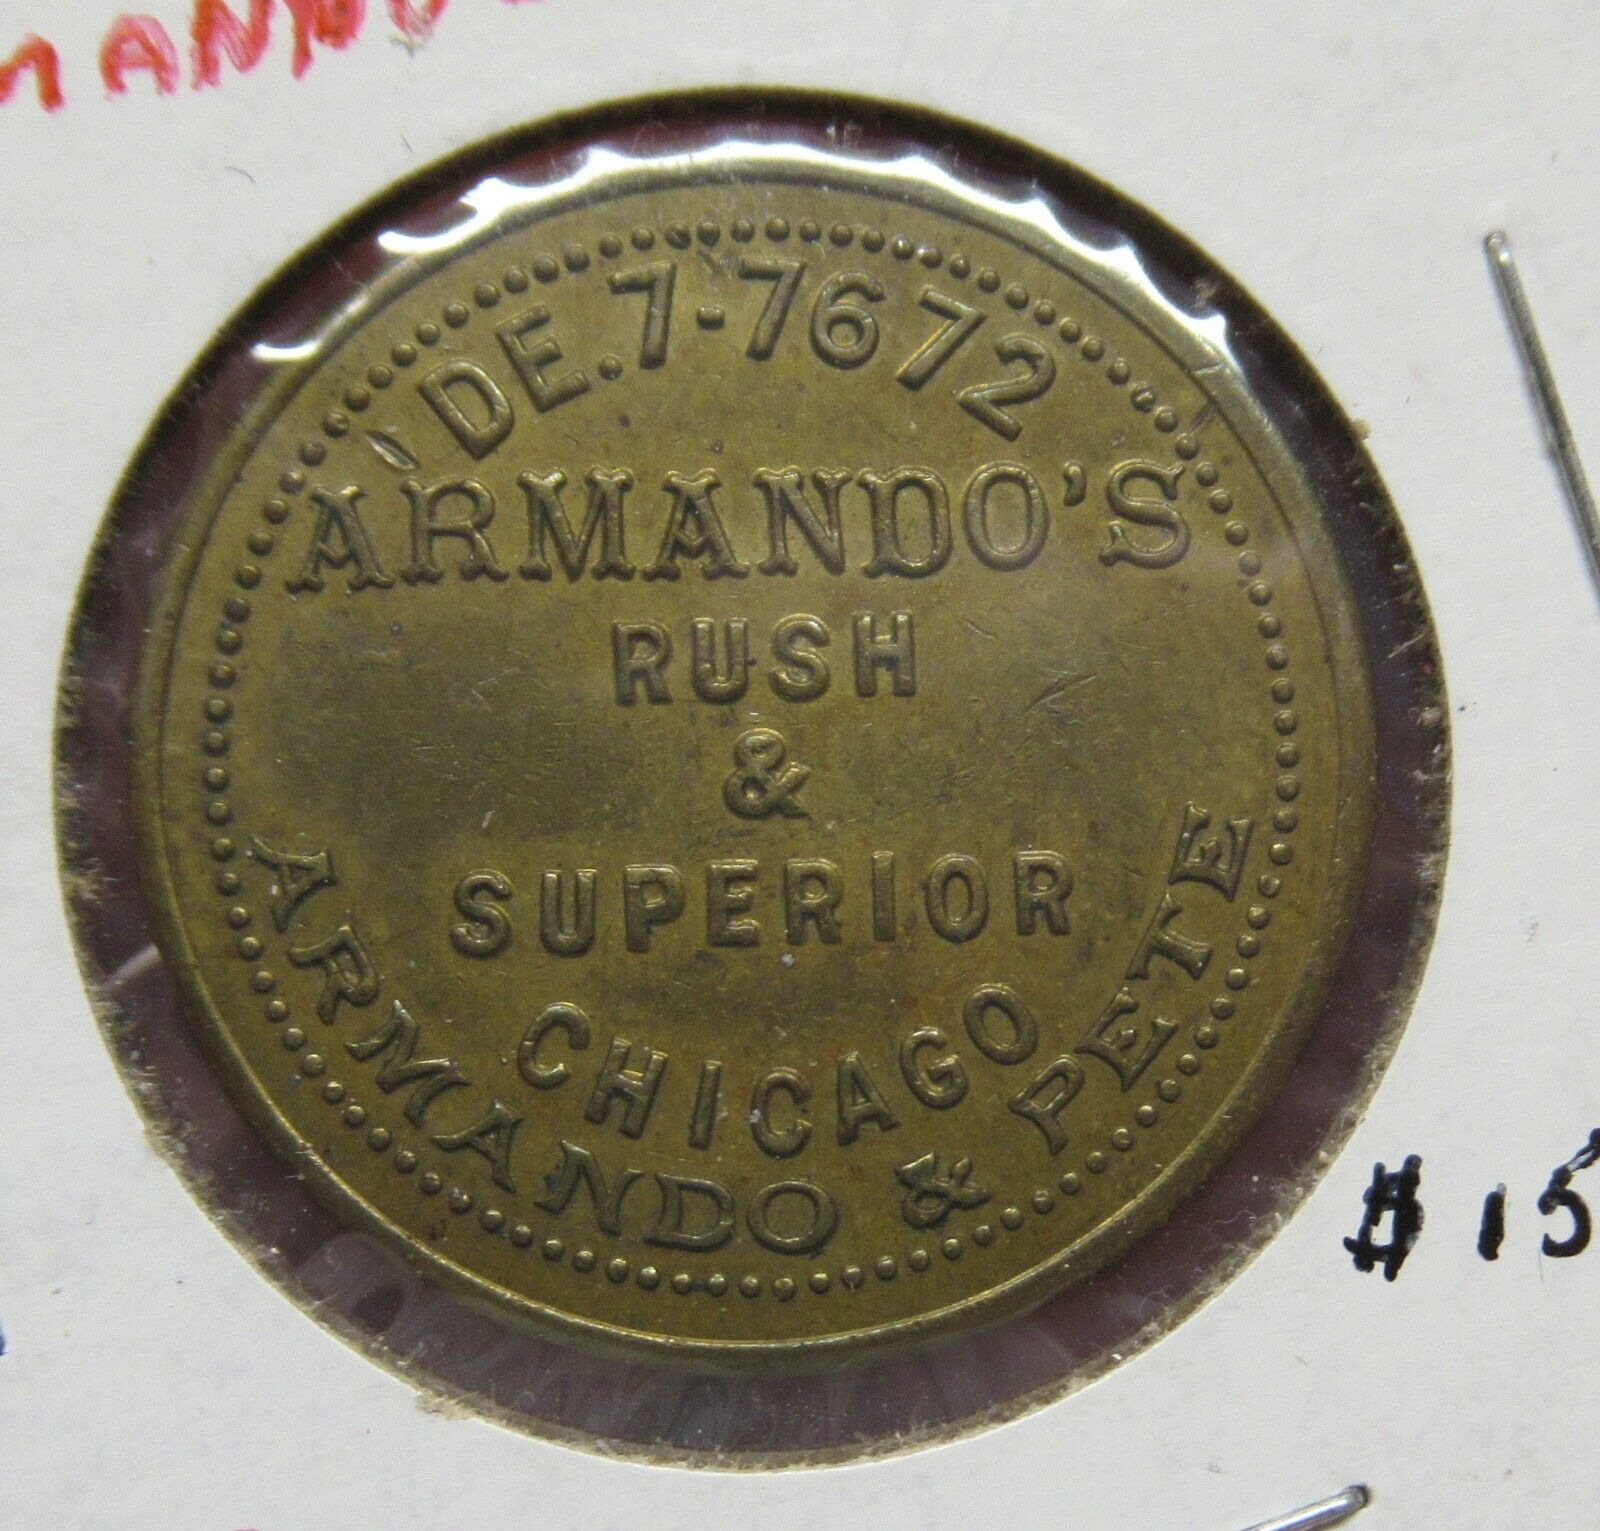 ARMANDO'S - RUSH & SUPERIOR - CHICAGO - GOOD FOR 25¢ IN TRADE -